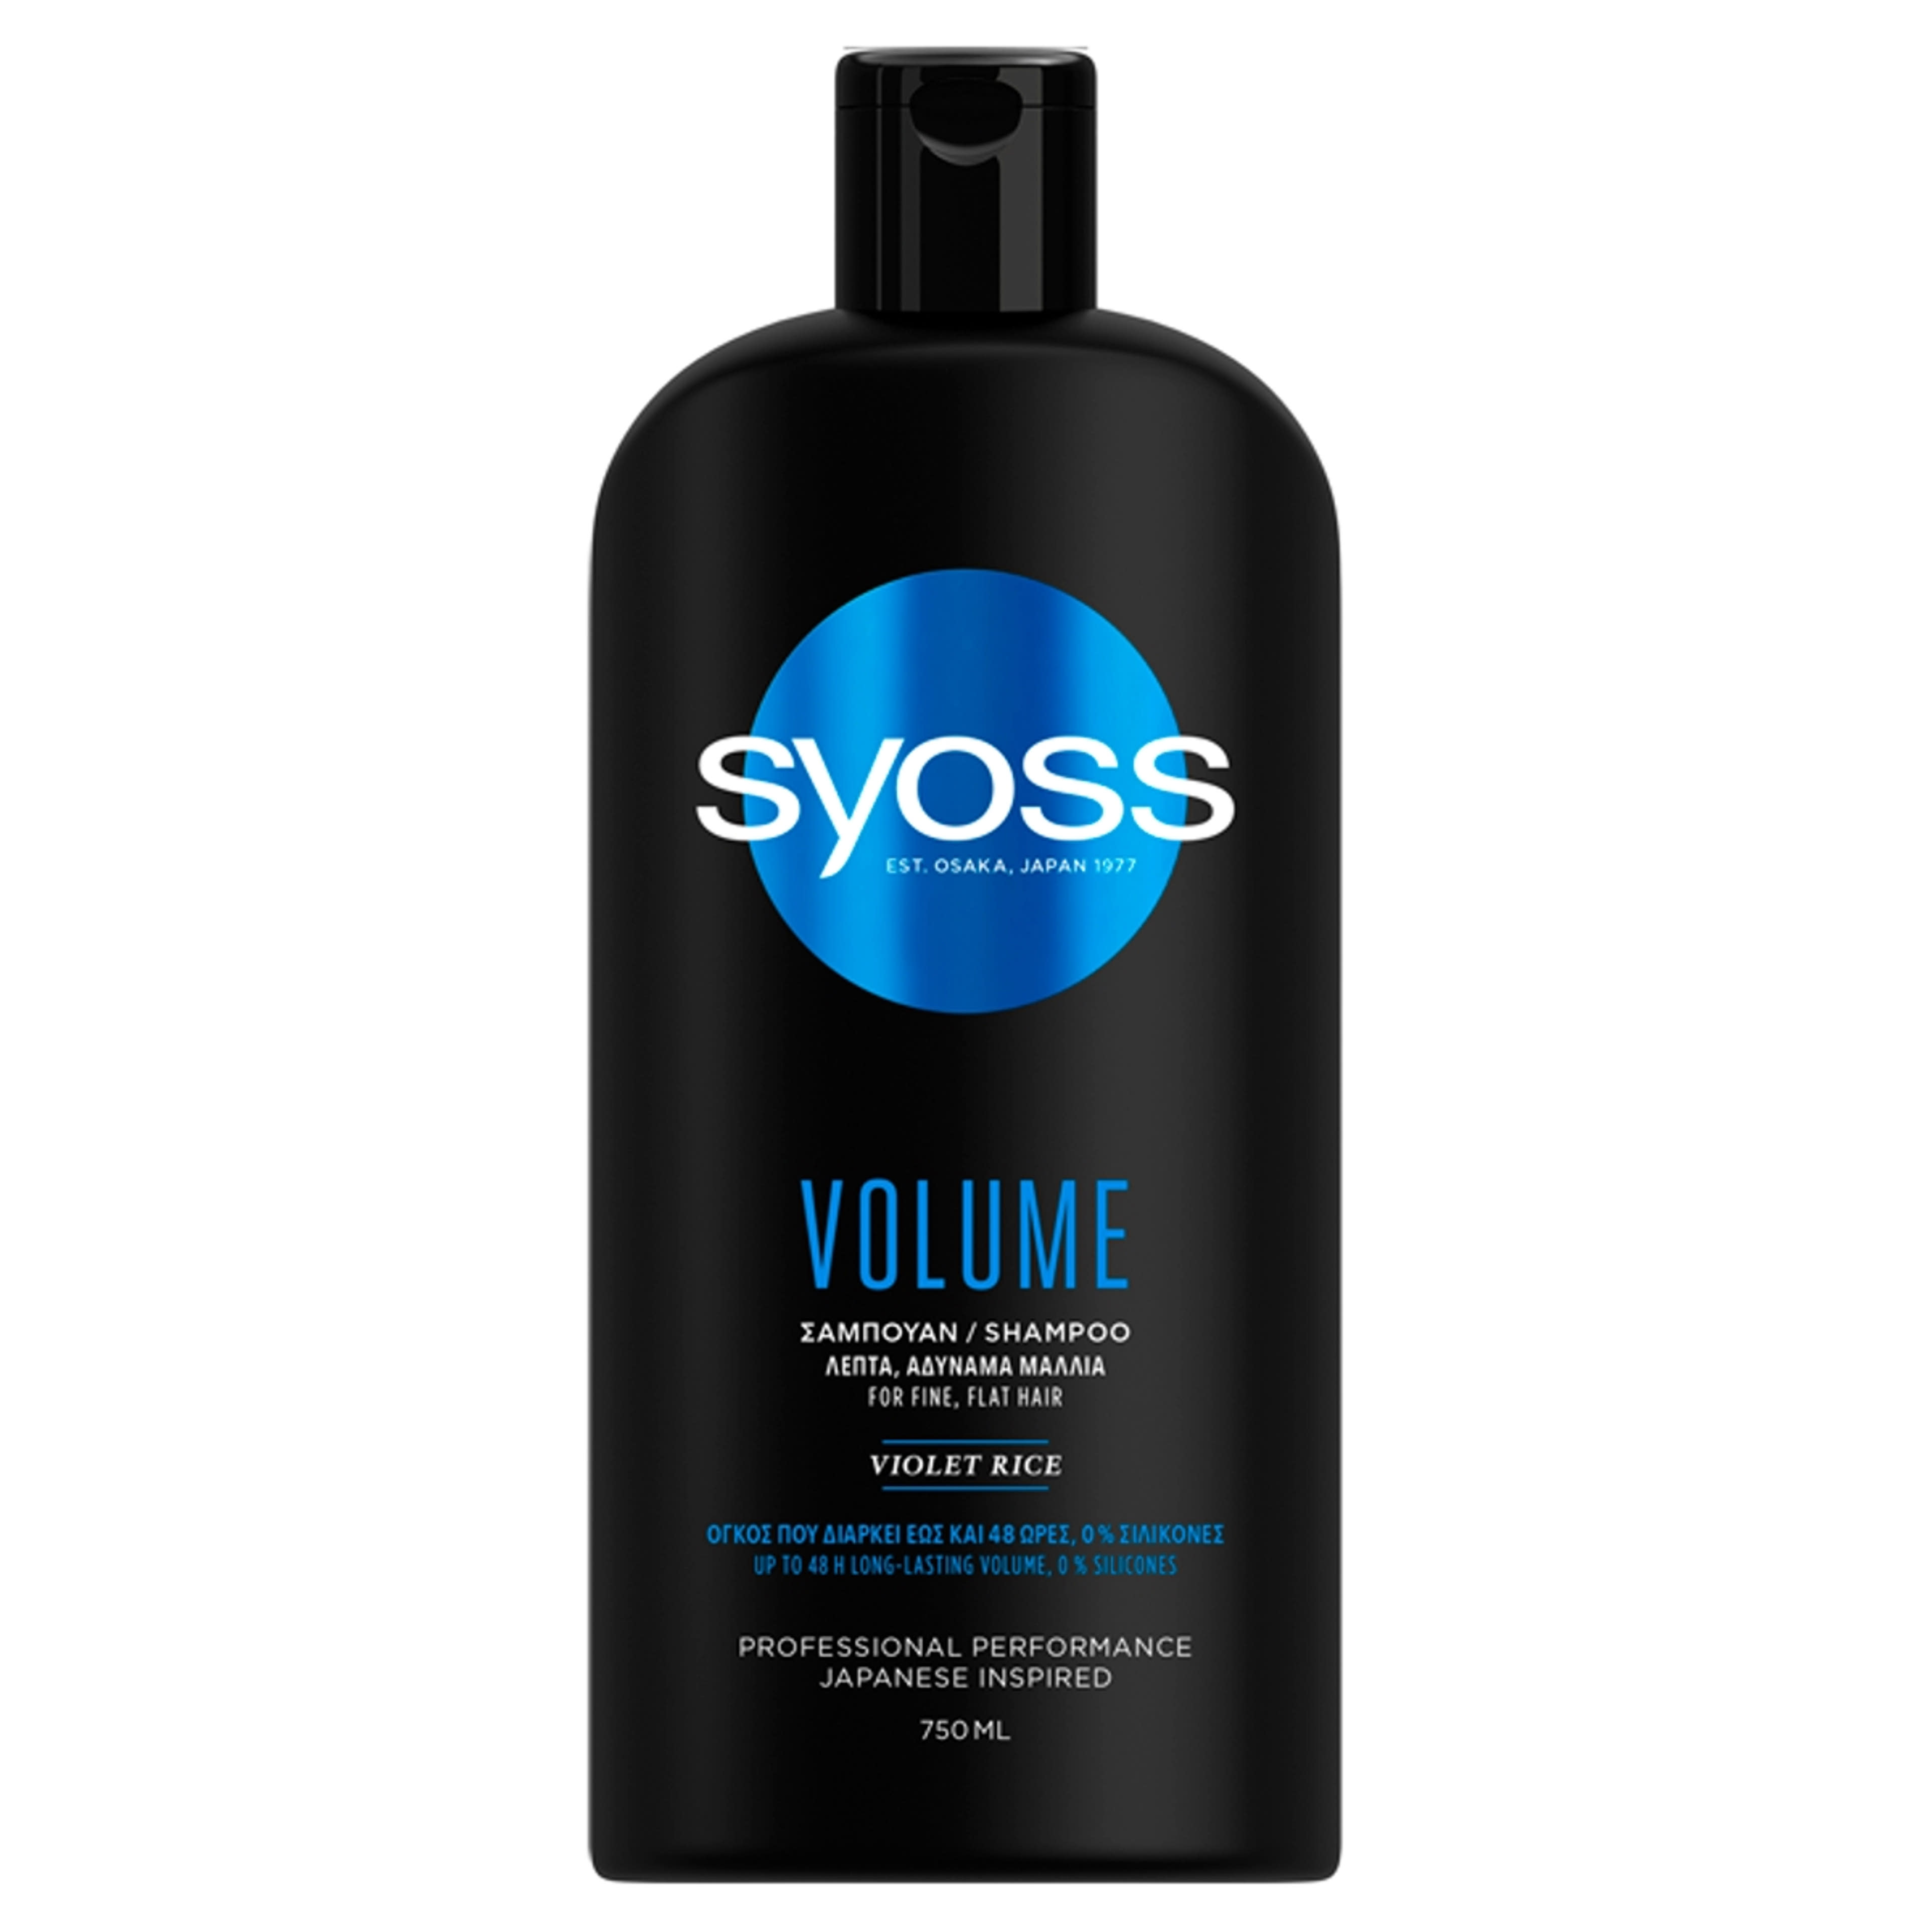 Syoss Volume sampon - 750 ml-1